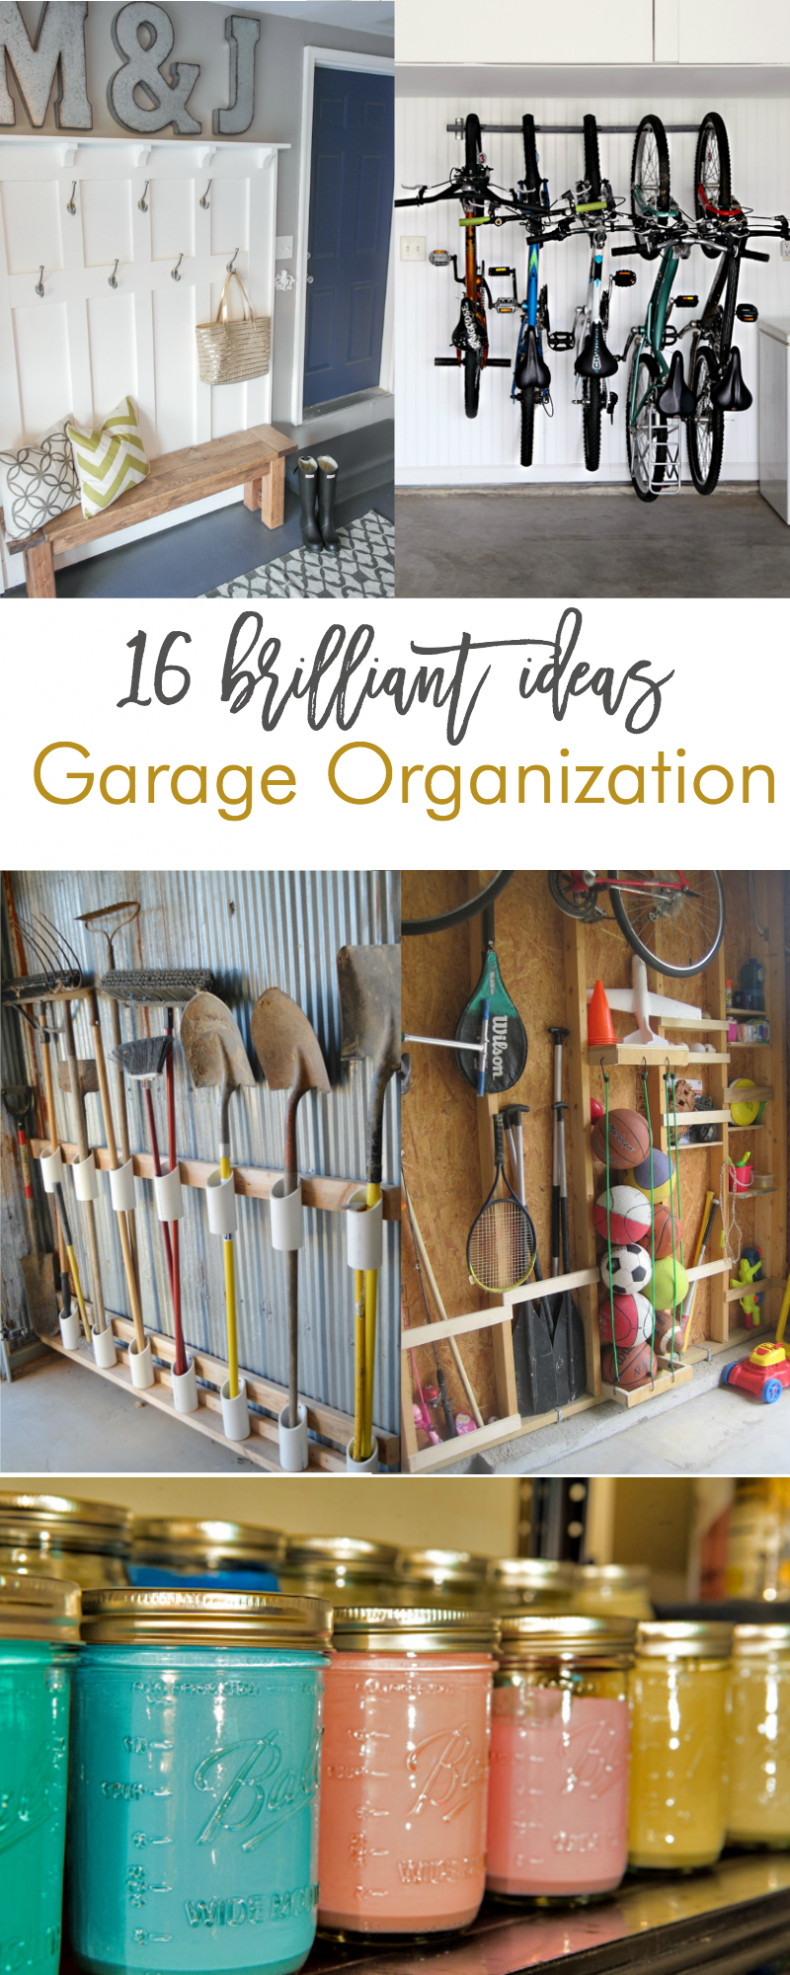 DIY Organization Tips
 16 Brilliant DIY Garage Organization Ideas